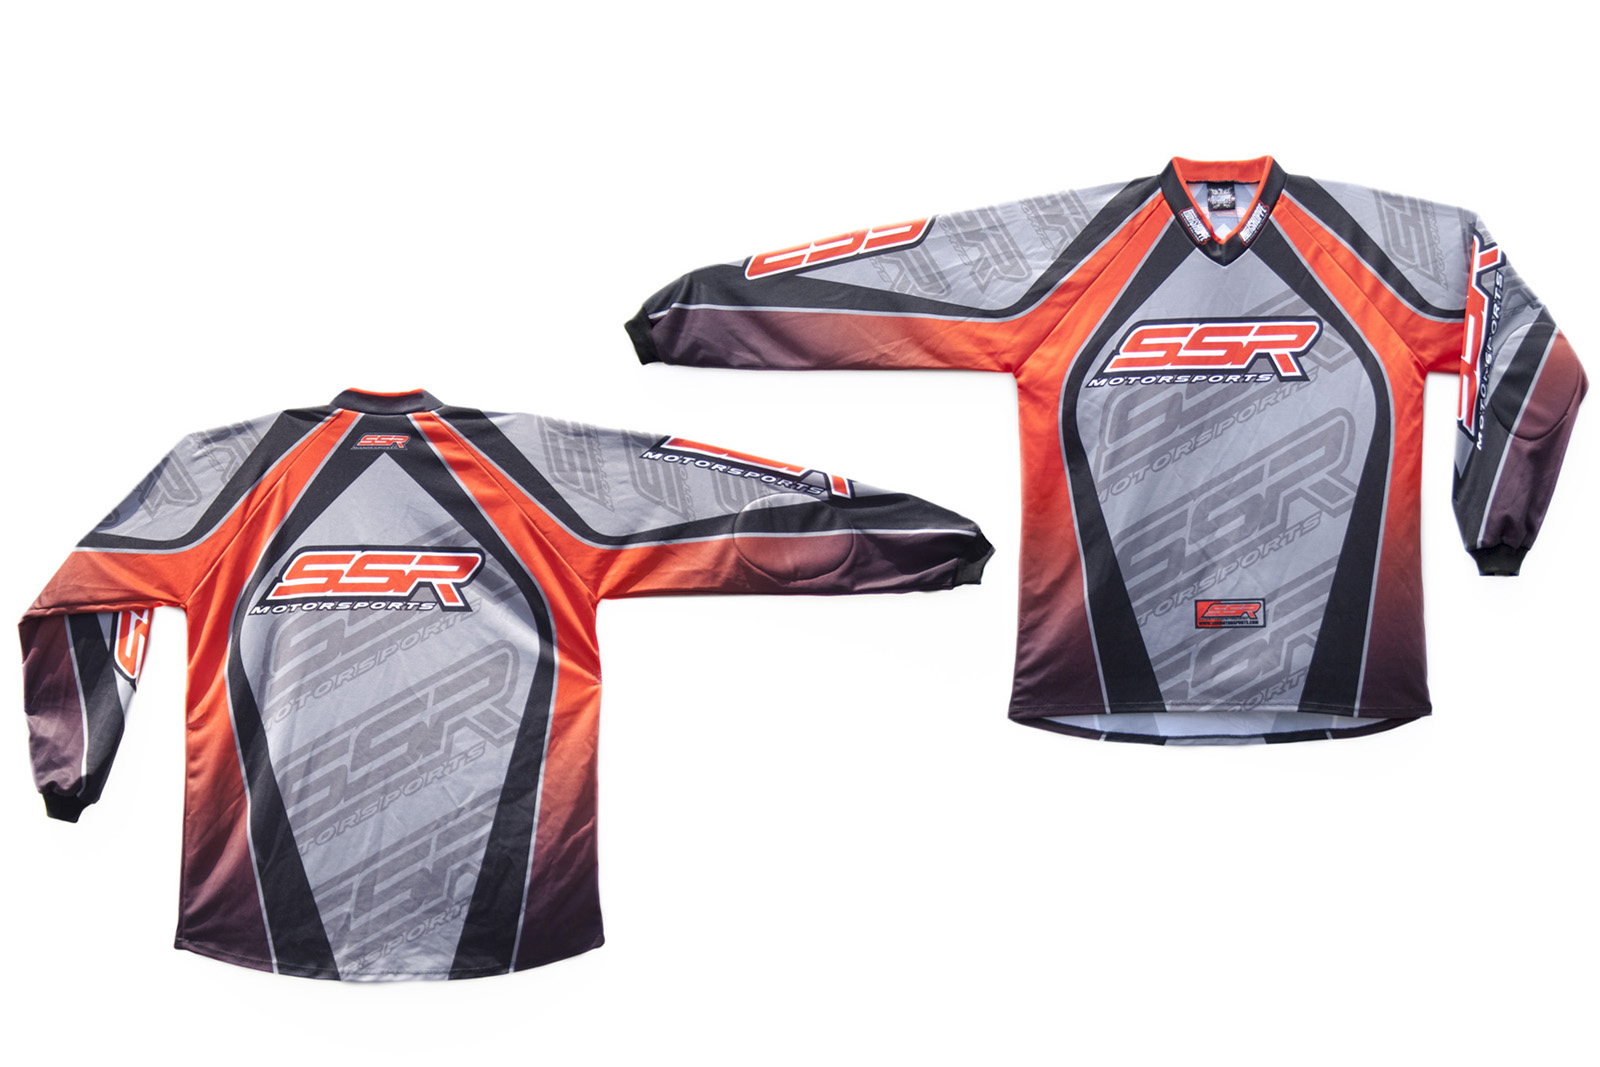 Sick Sideways Racing Shirt with SSR Logo and Sponsors Logos (Medium Size)